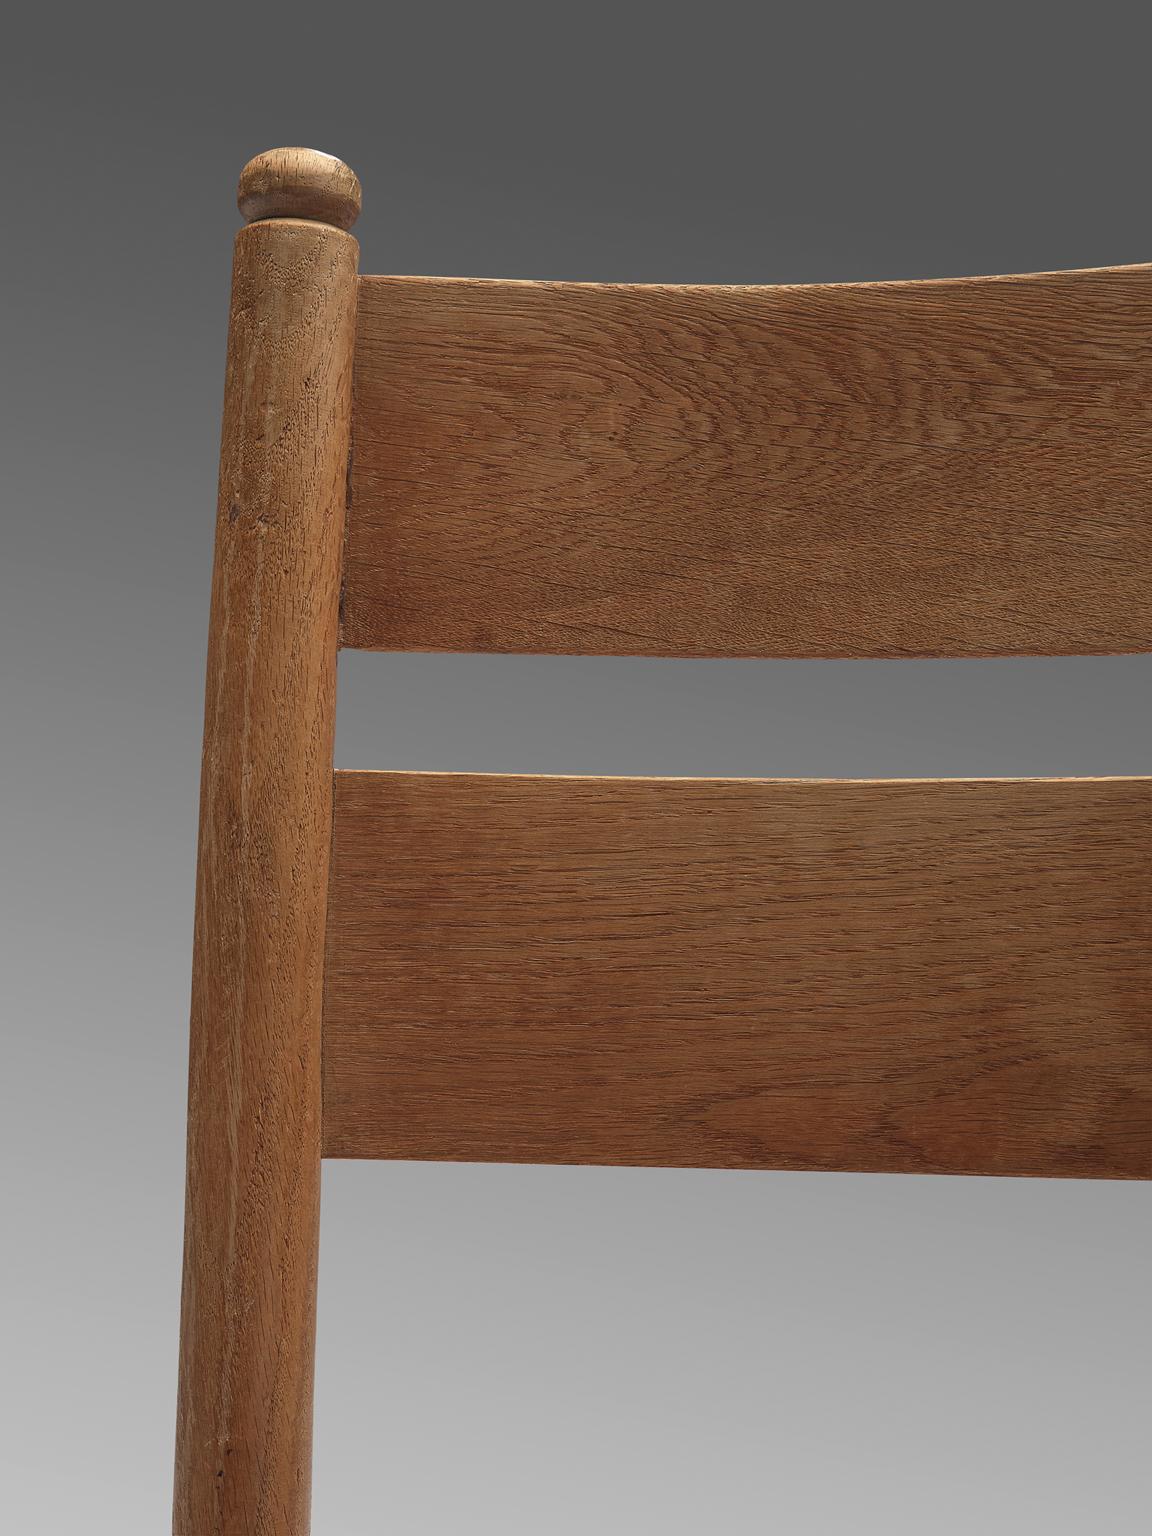 Rustic Danish Chairs in Rush and Oak 1